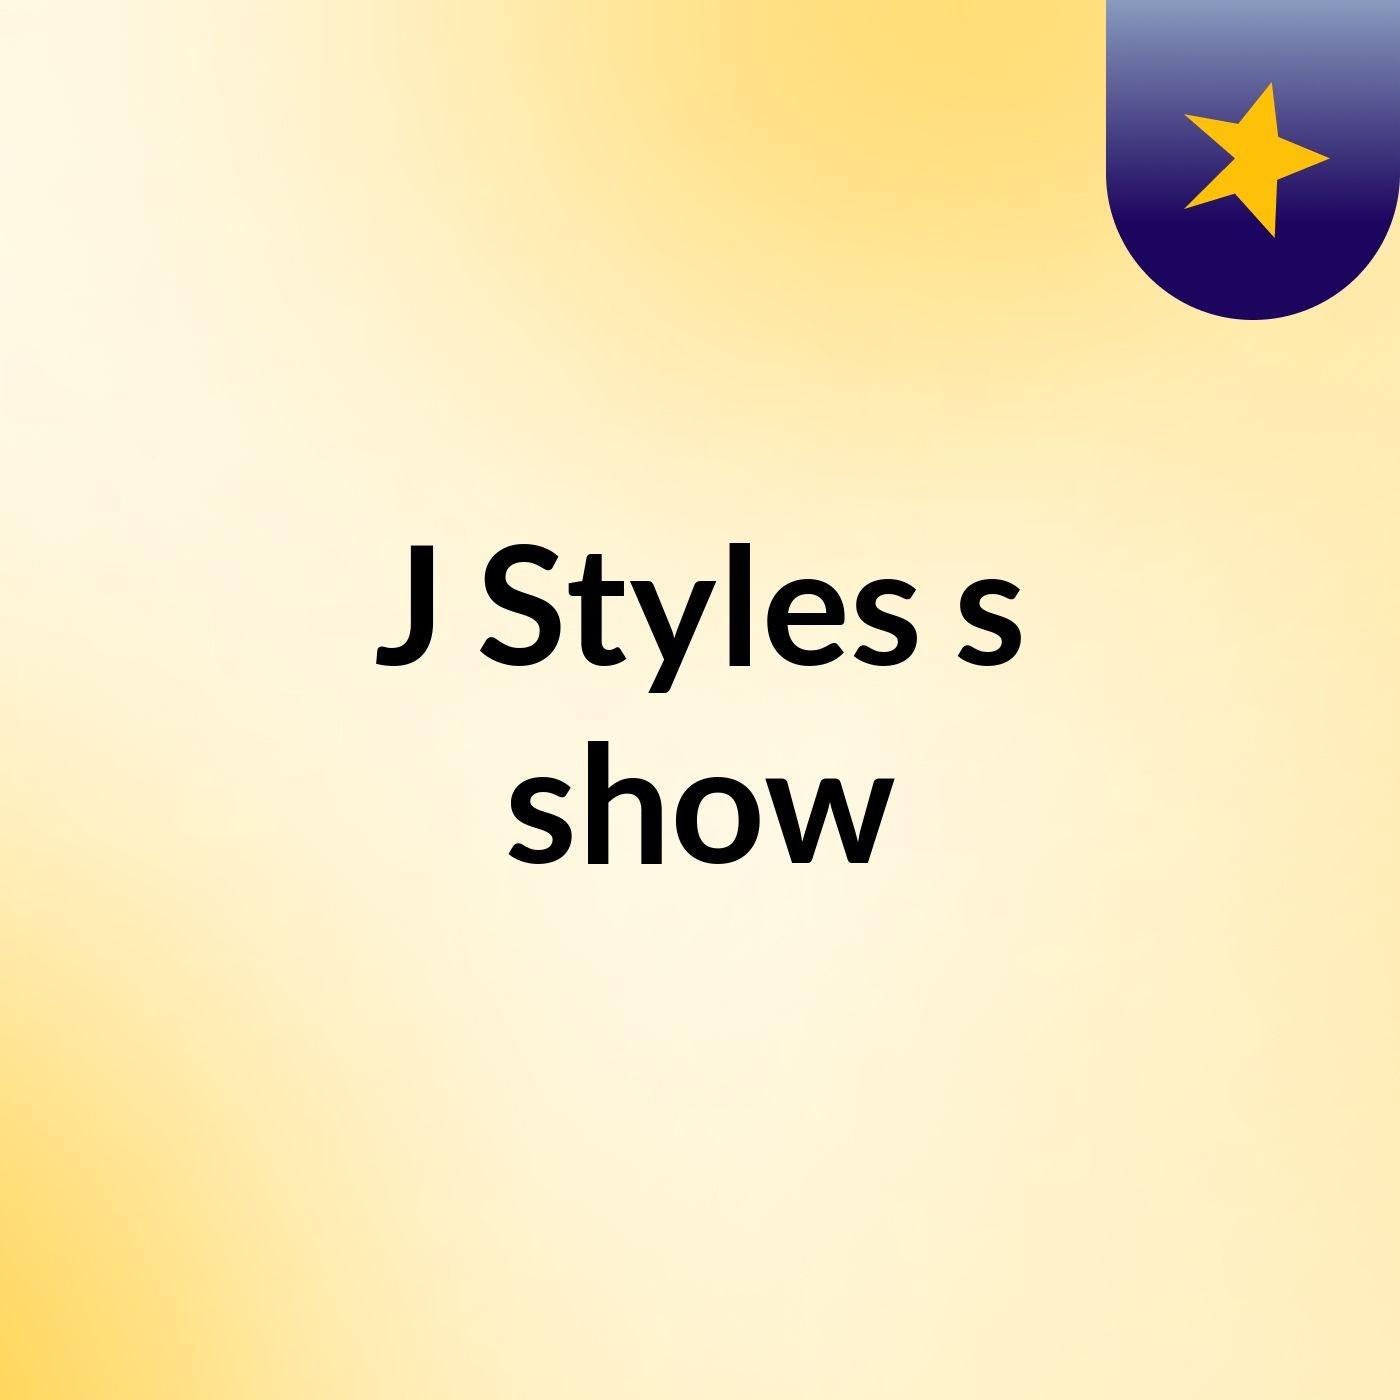 J Styles's show